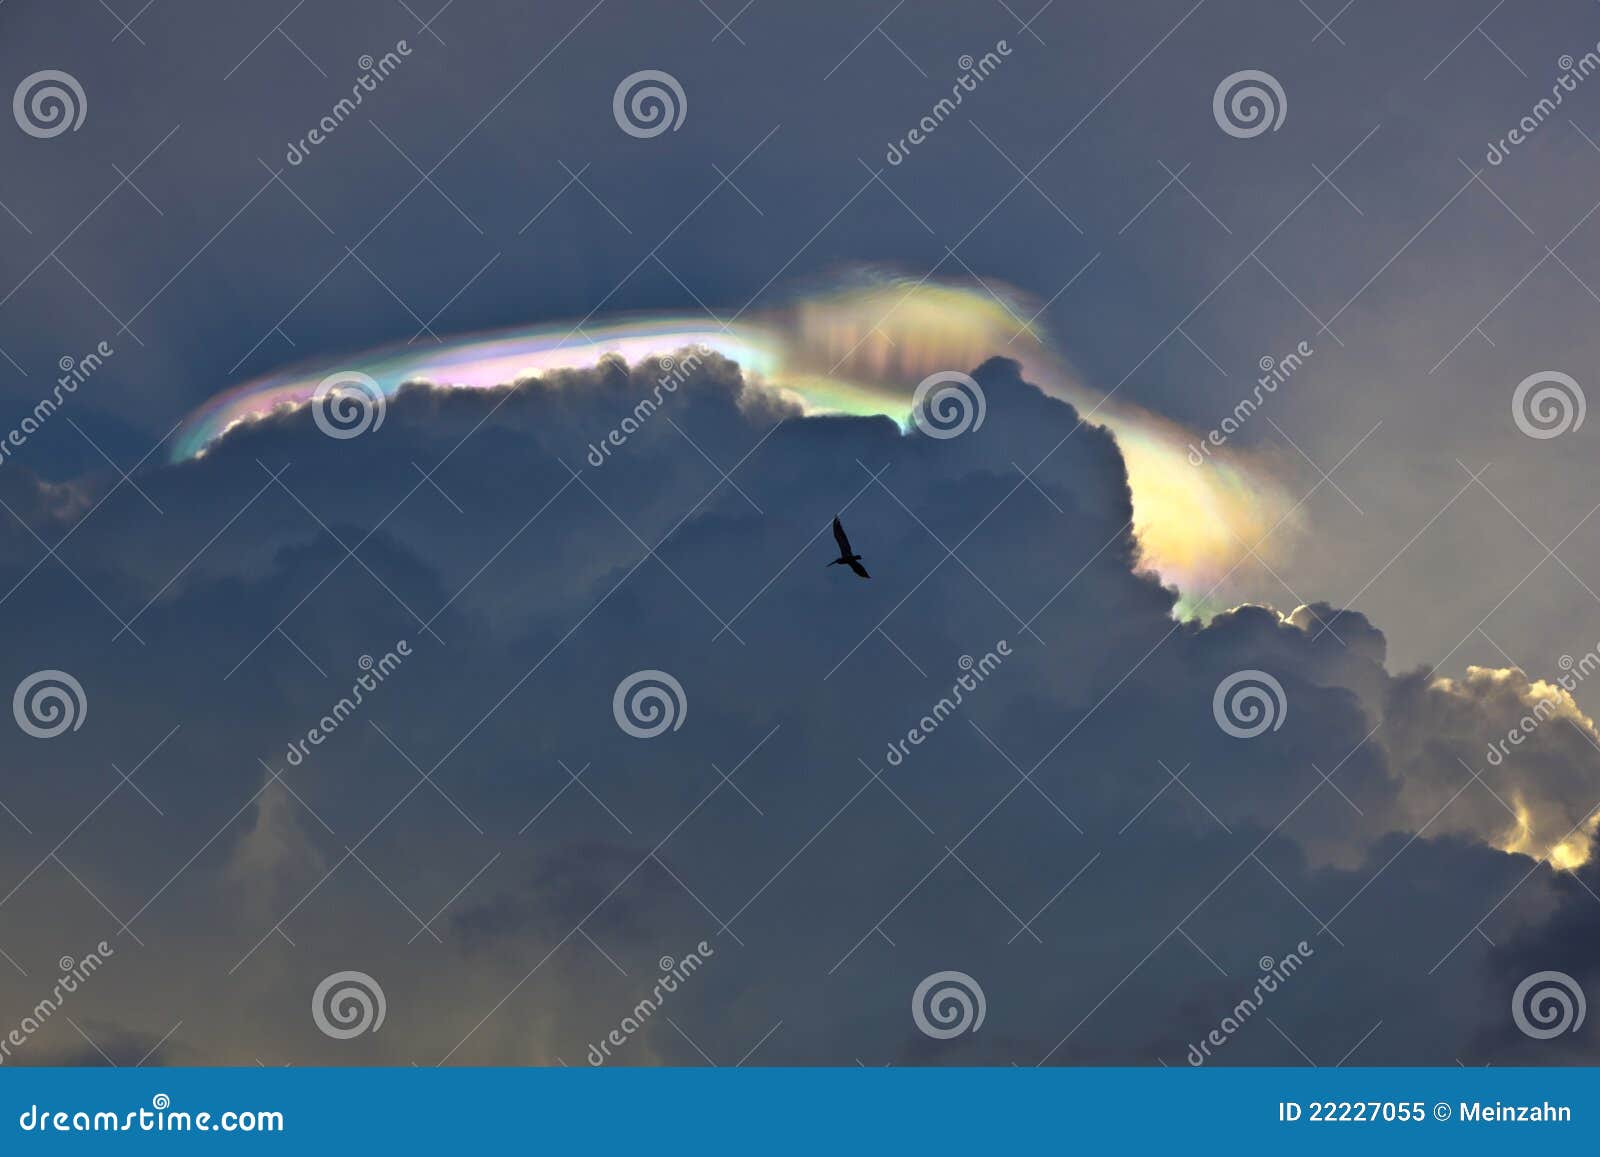 pelican flying under dark clouds with rainbow